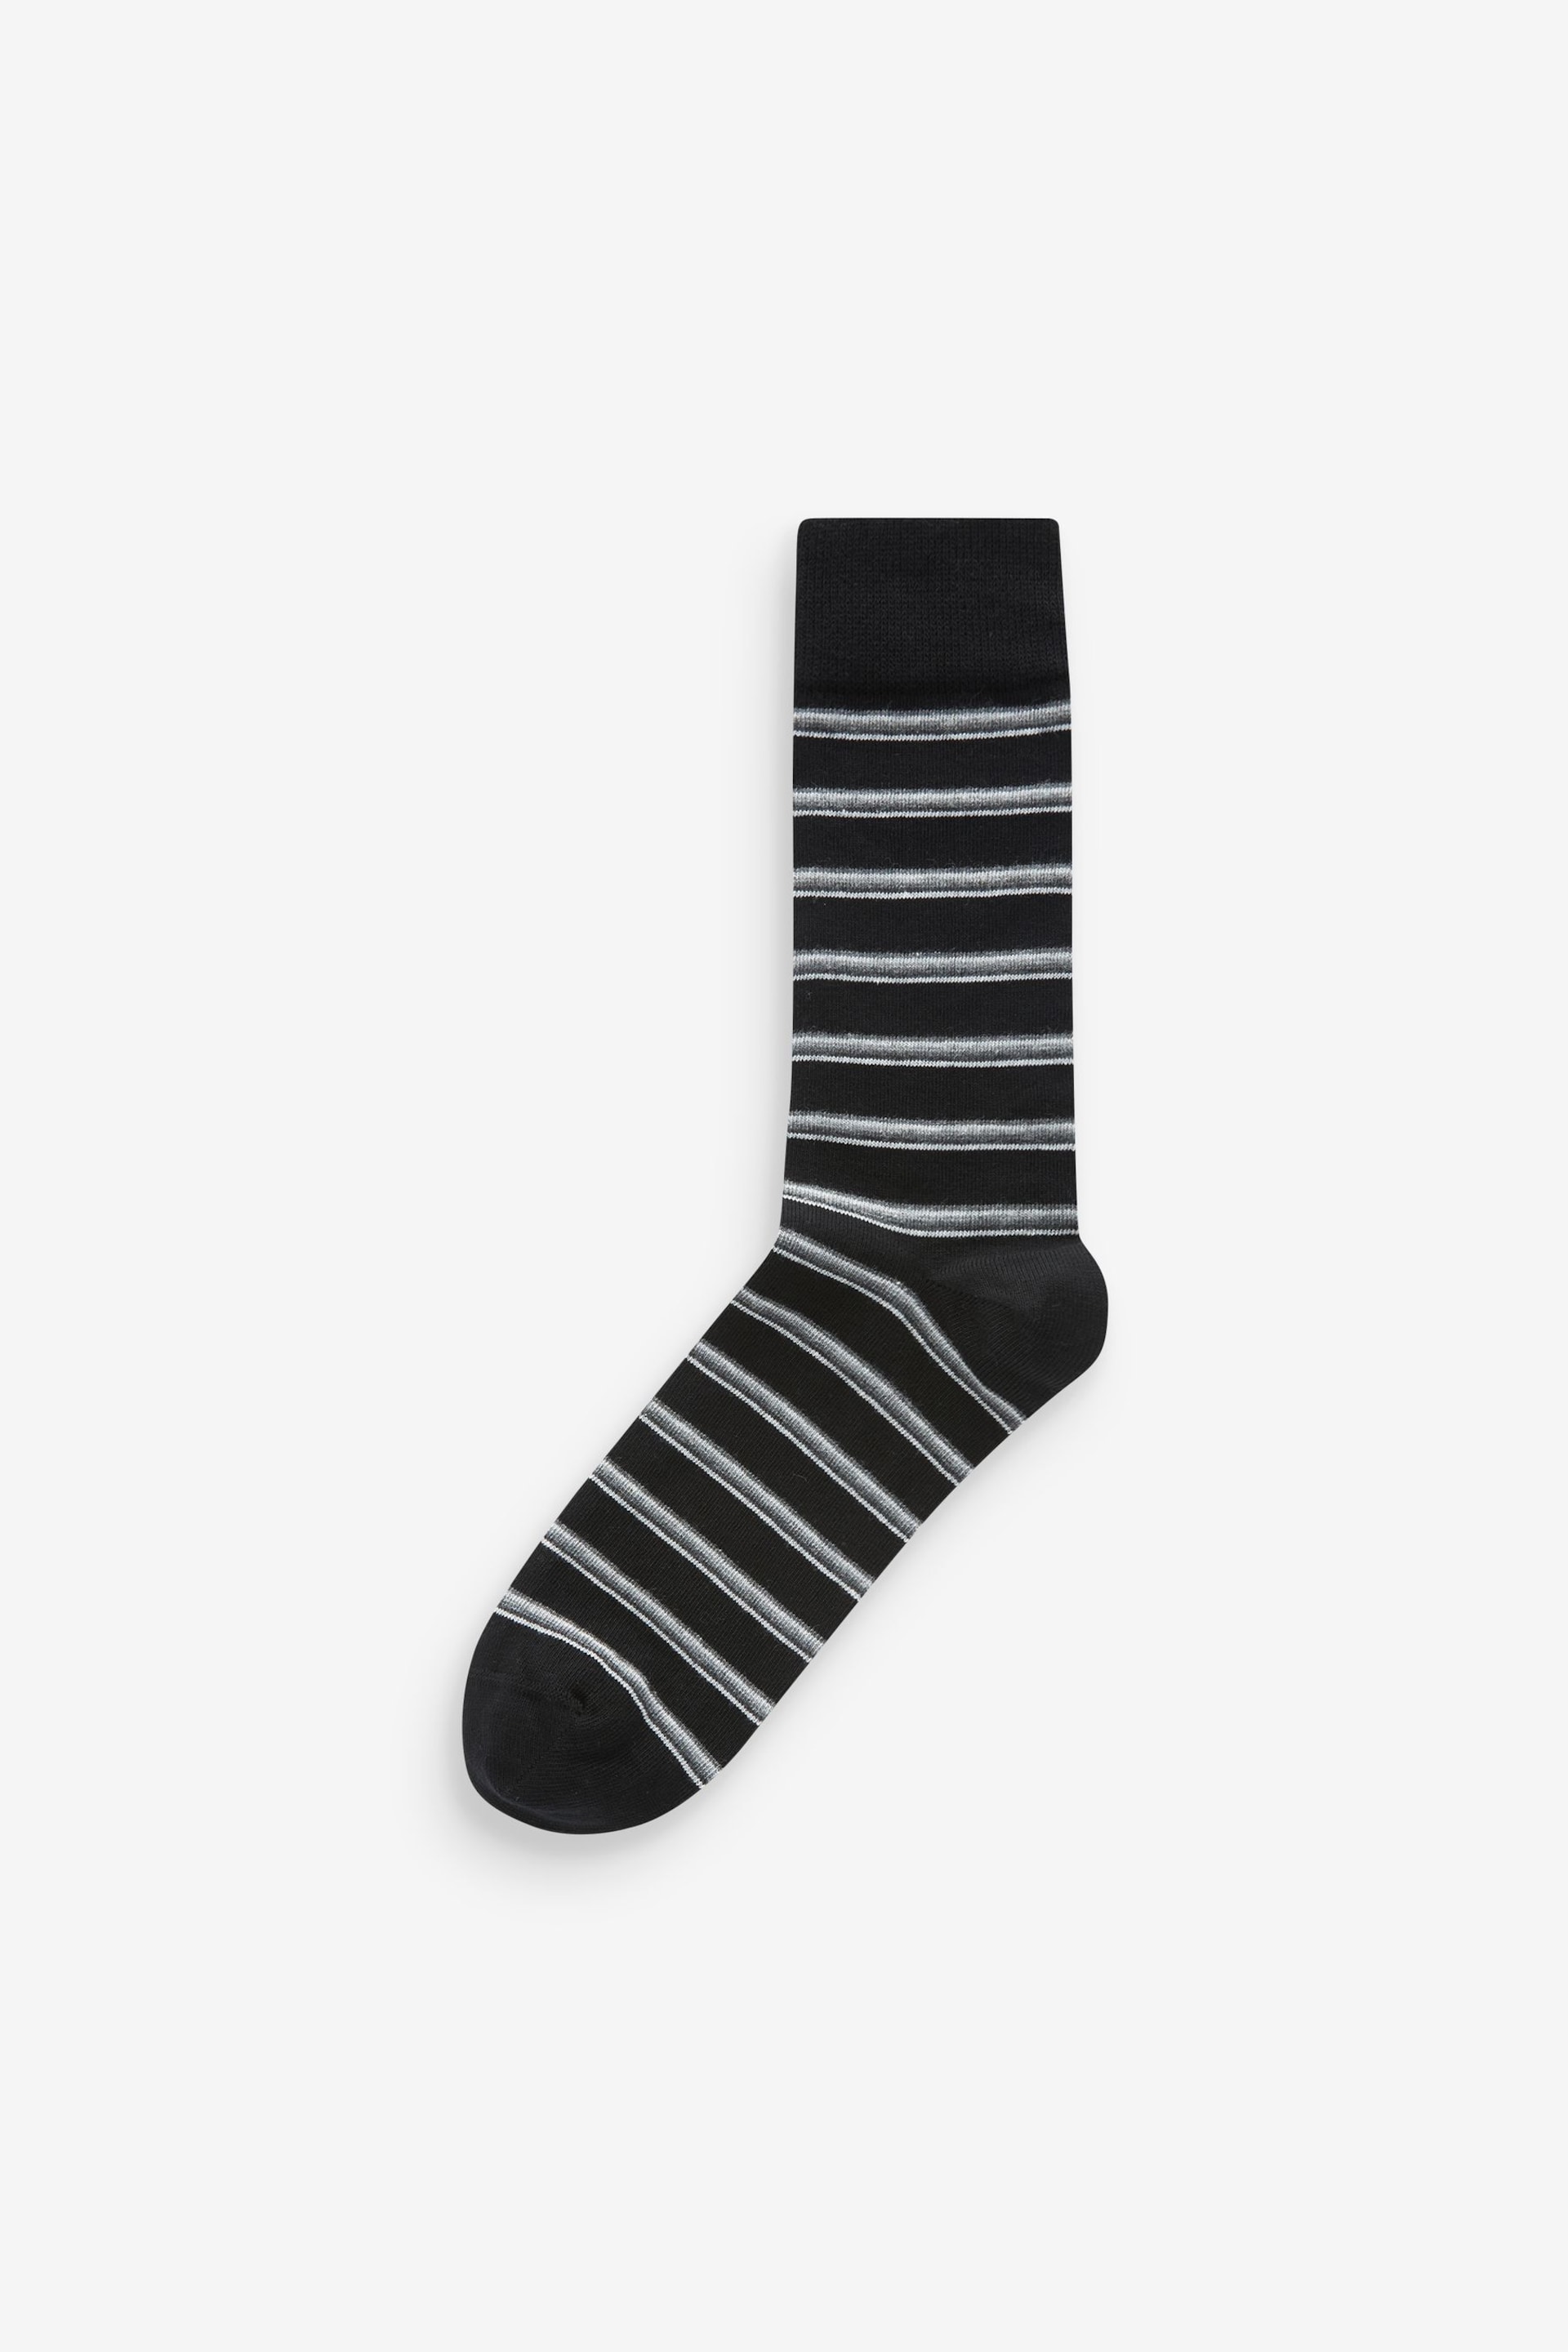 Navy Blue/Black Pattern Smart Socks 8 Pack - Image 8 of 10